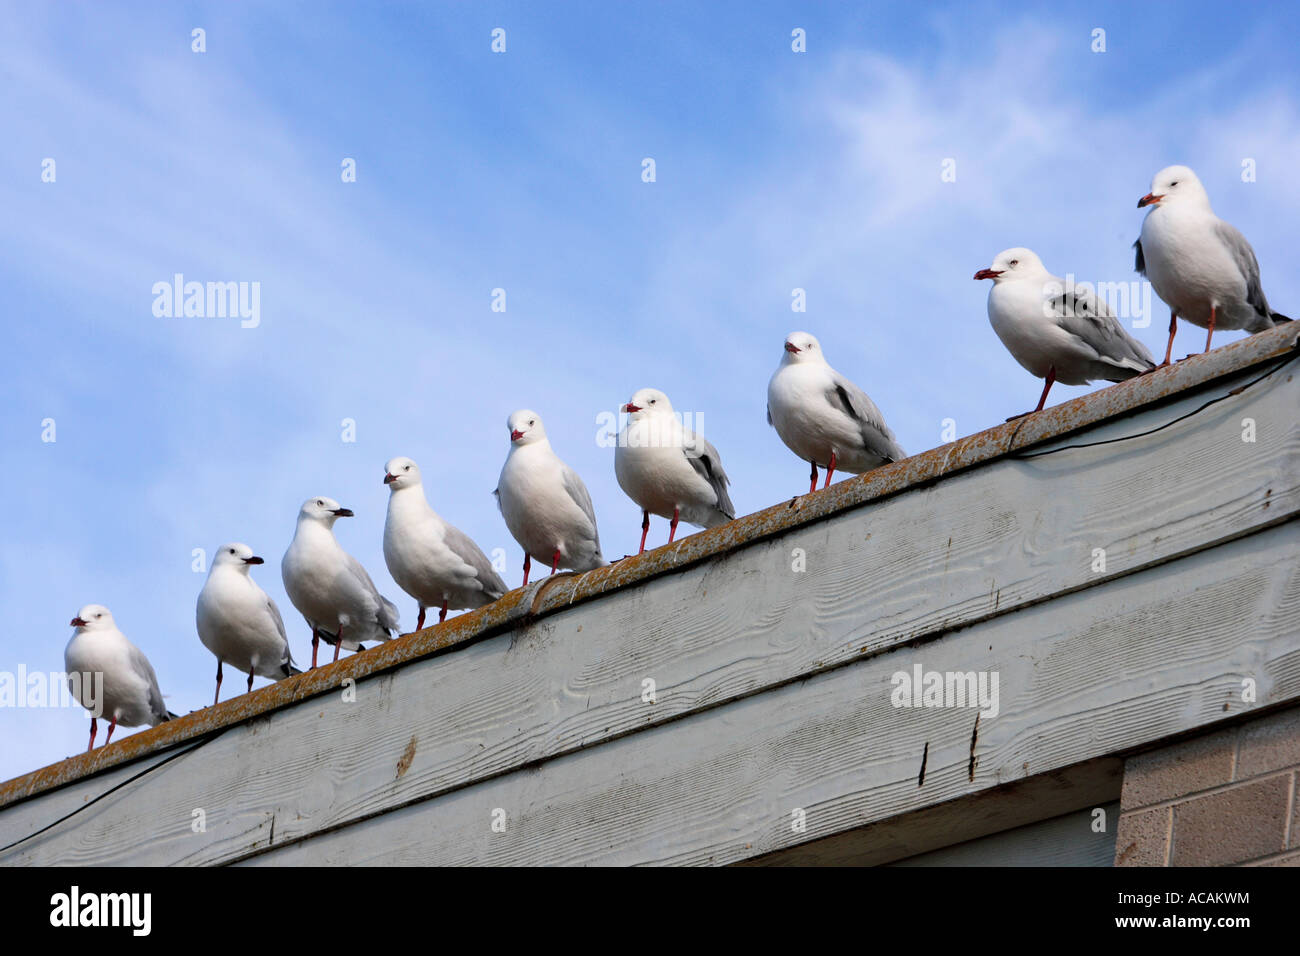 Black-headed gulls (Larus ridibundus) Sea gulls sitting in a row on a roof Stock Photo